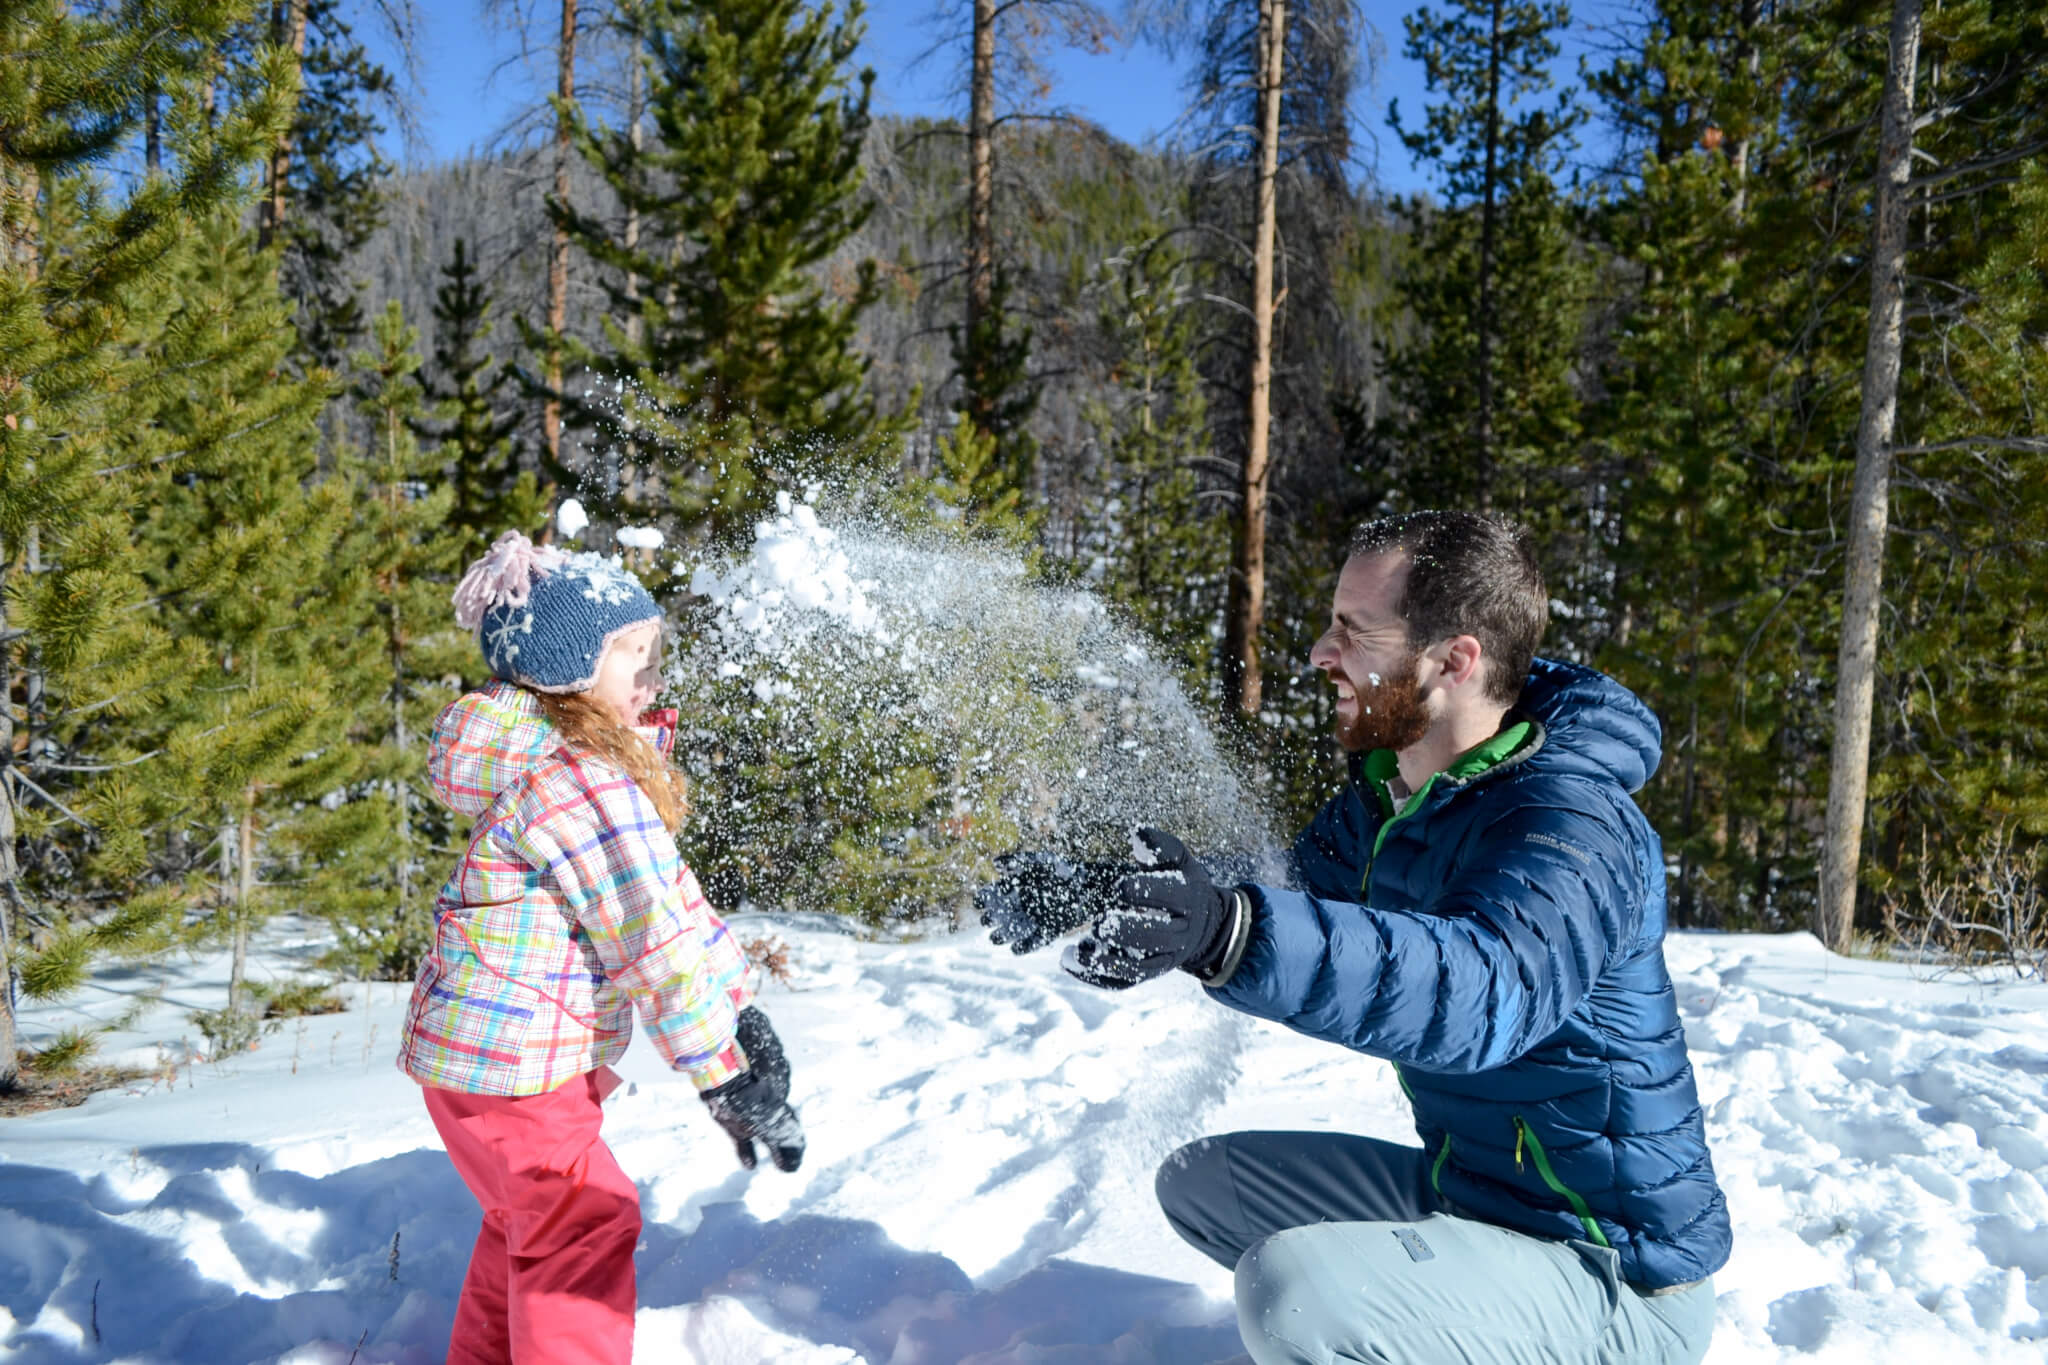 Prepping your kids for ski season